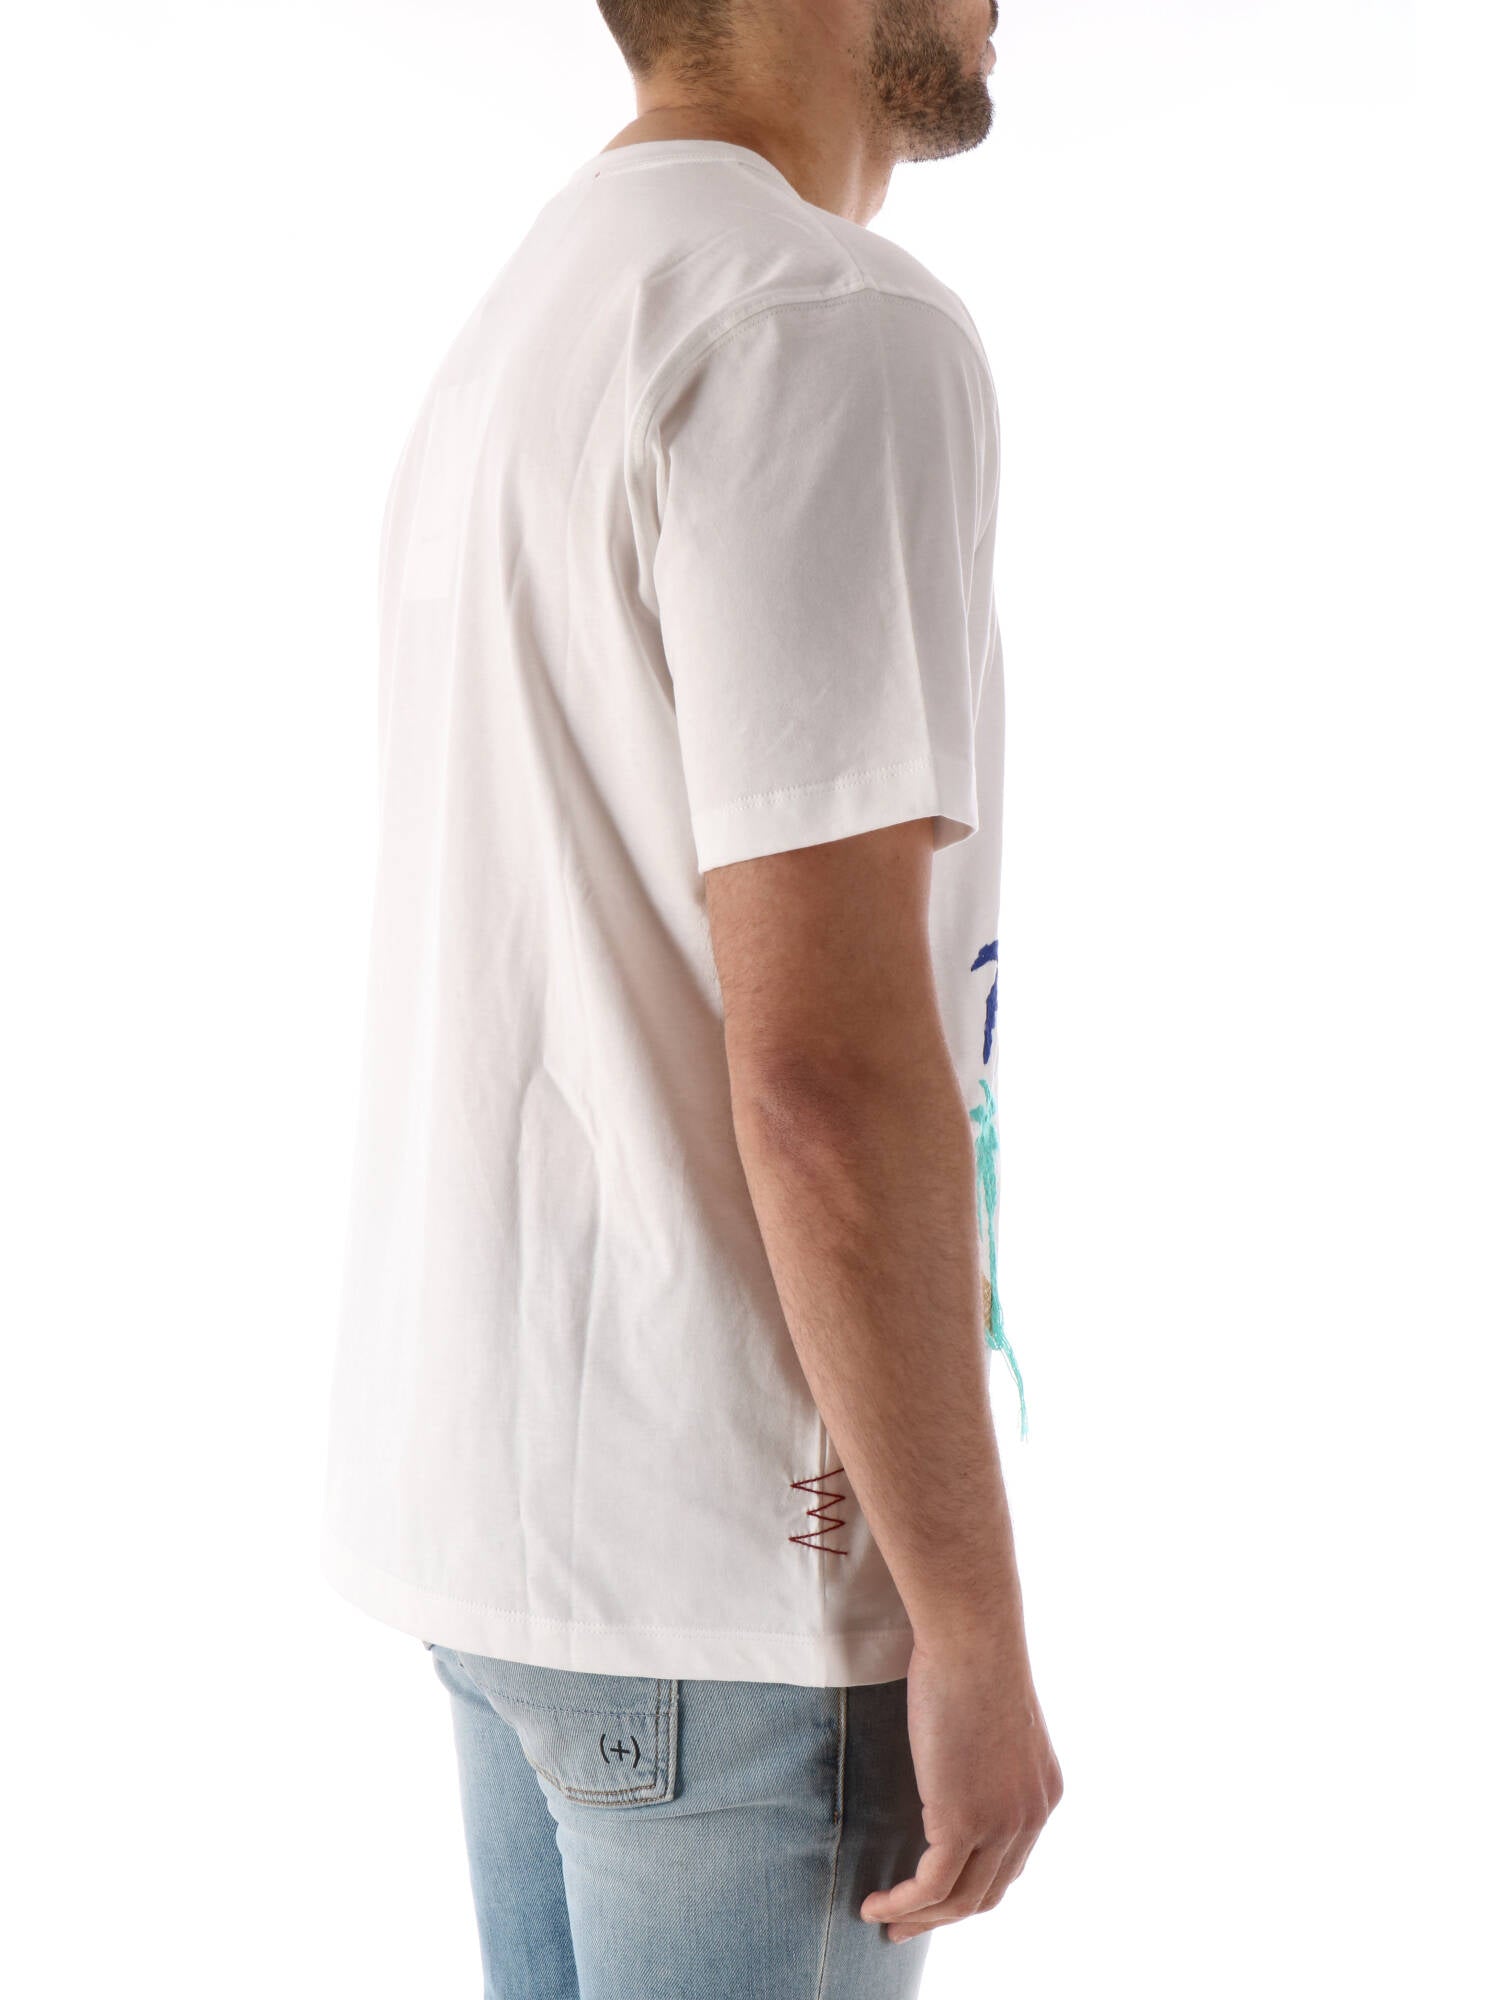 Amaranto t-shirt bianca con stampe